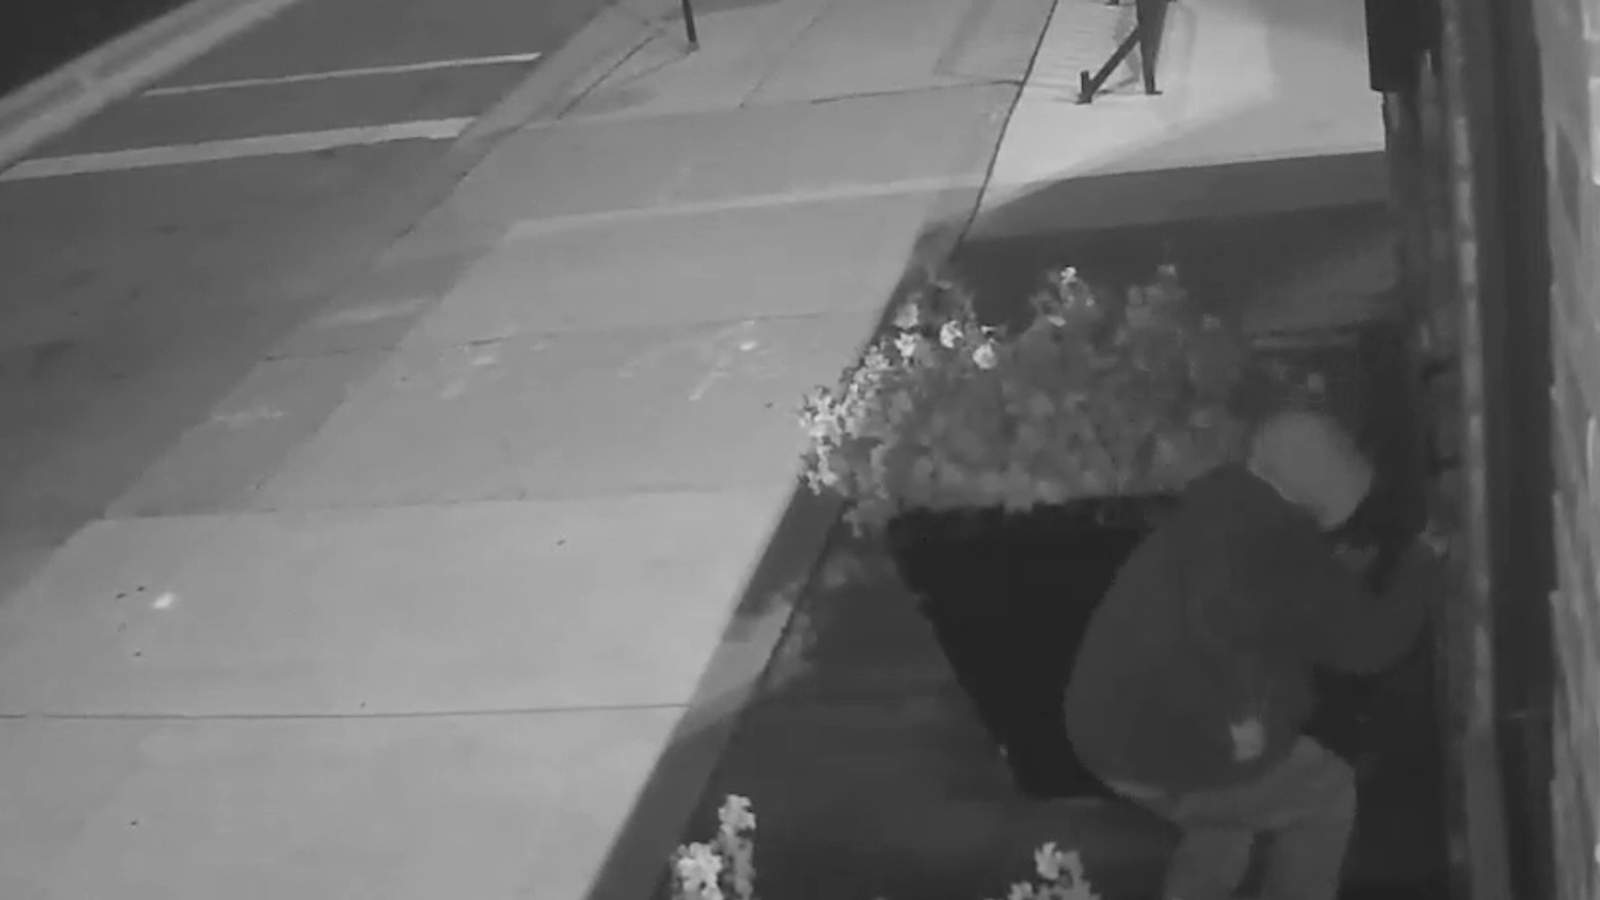 VIDEO: Detroit restaurant broken into, police seek suspect